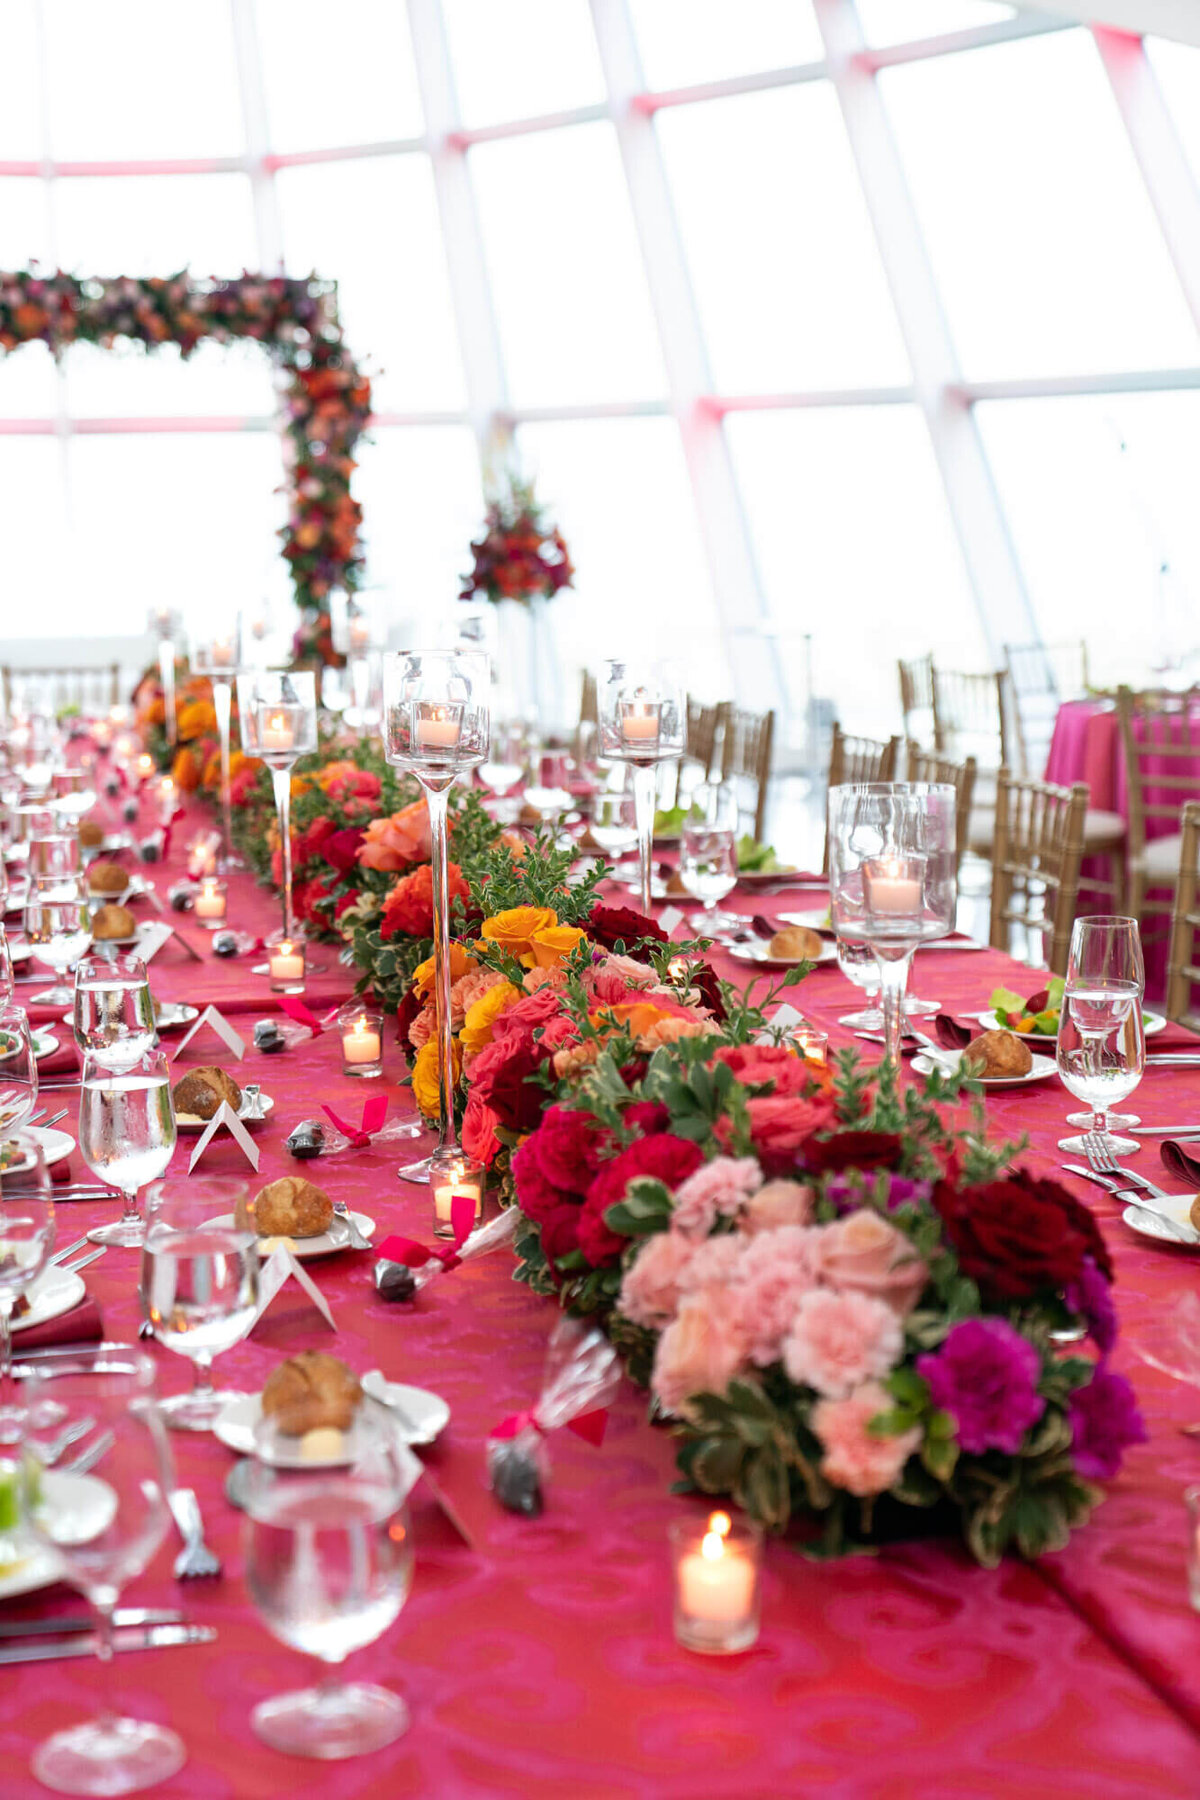 milwaukee-art-museum-wedding-decor-pink-red-orange-bright-11